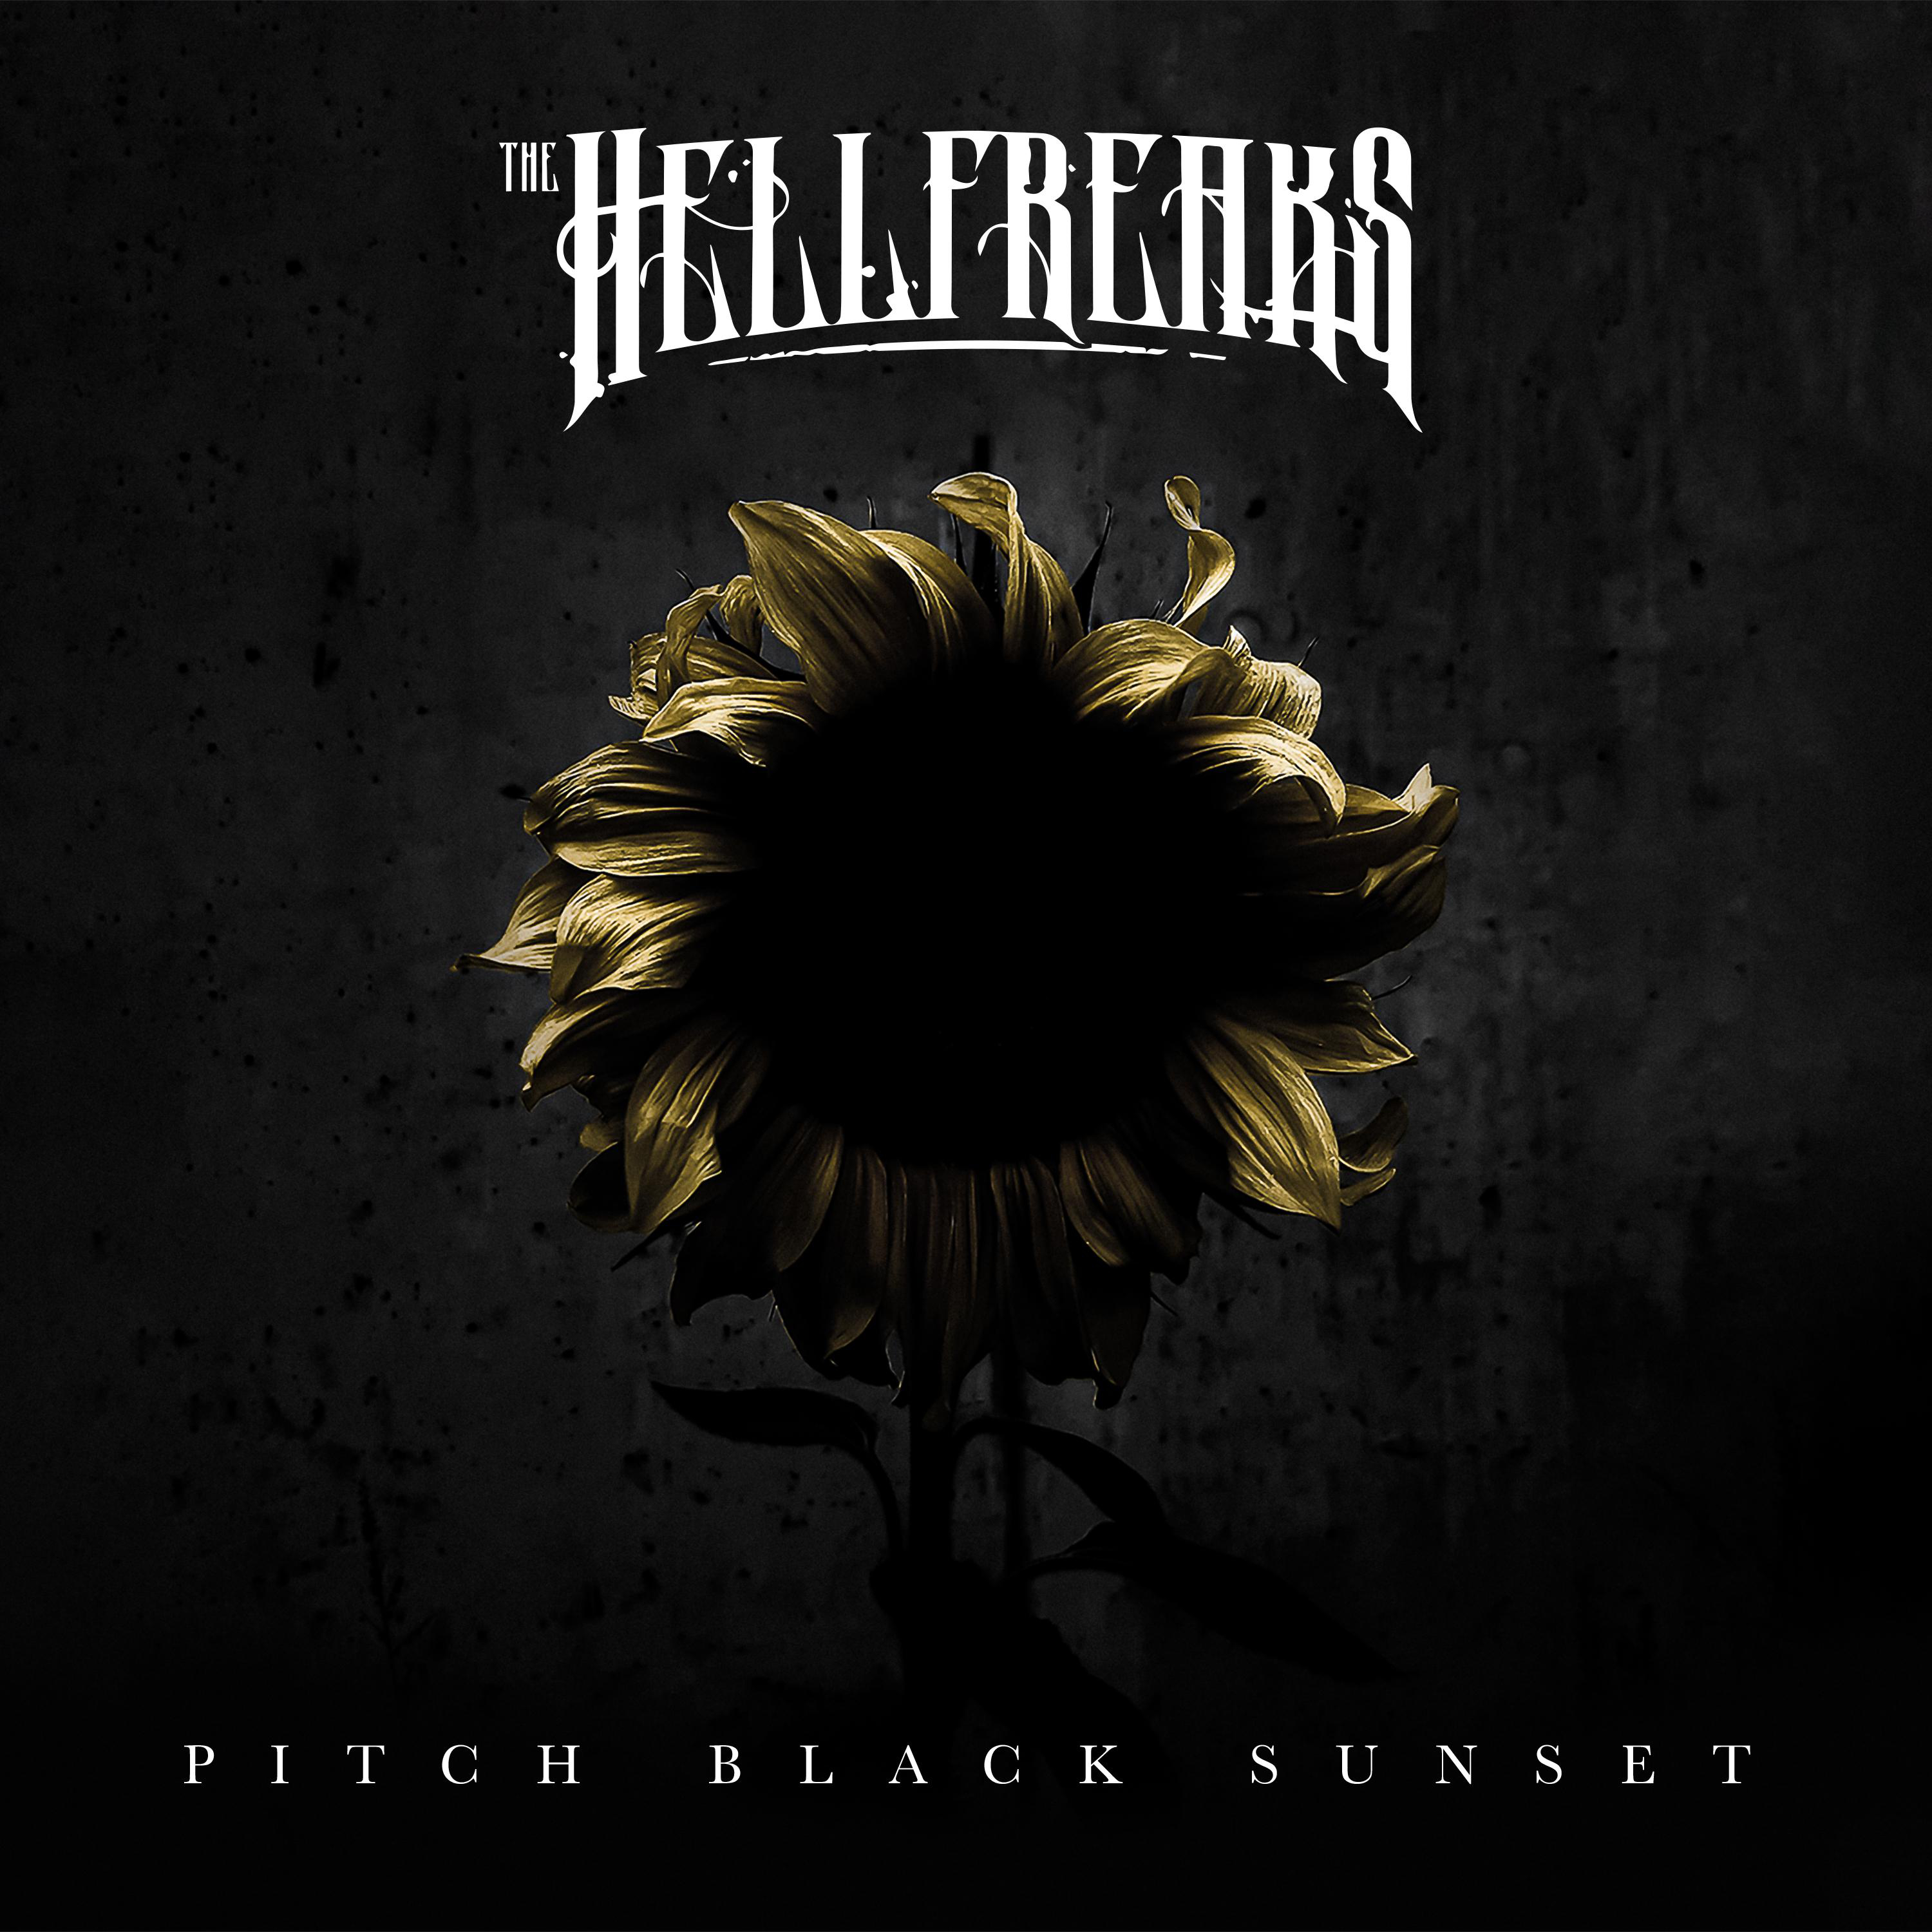 The (CD) Pitch Hellfreaks - Black - Sunset